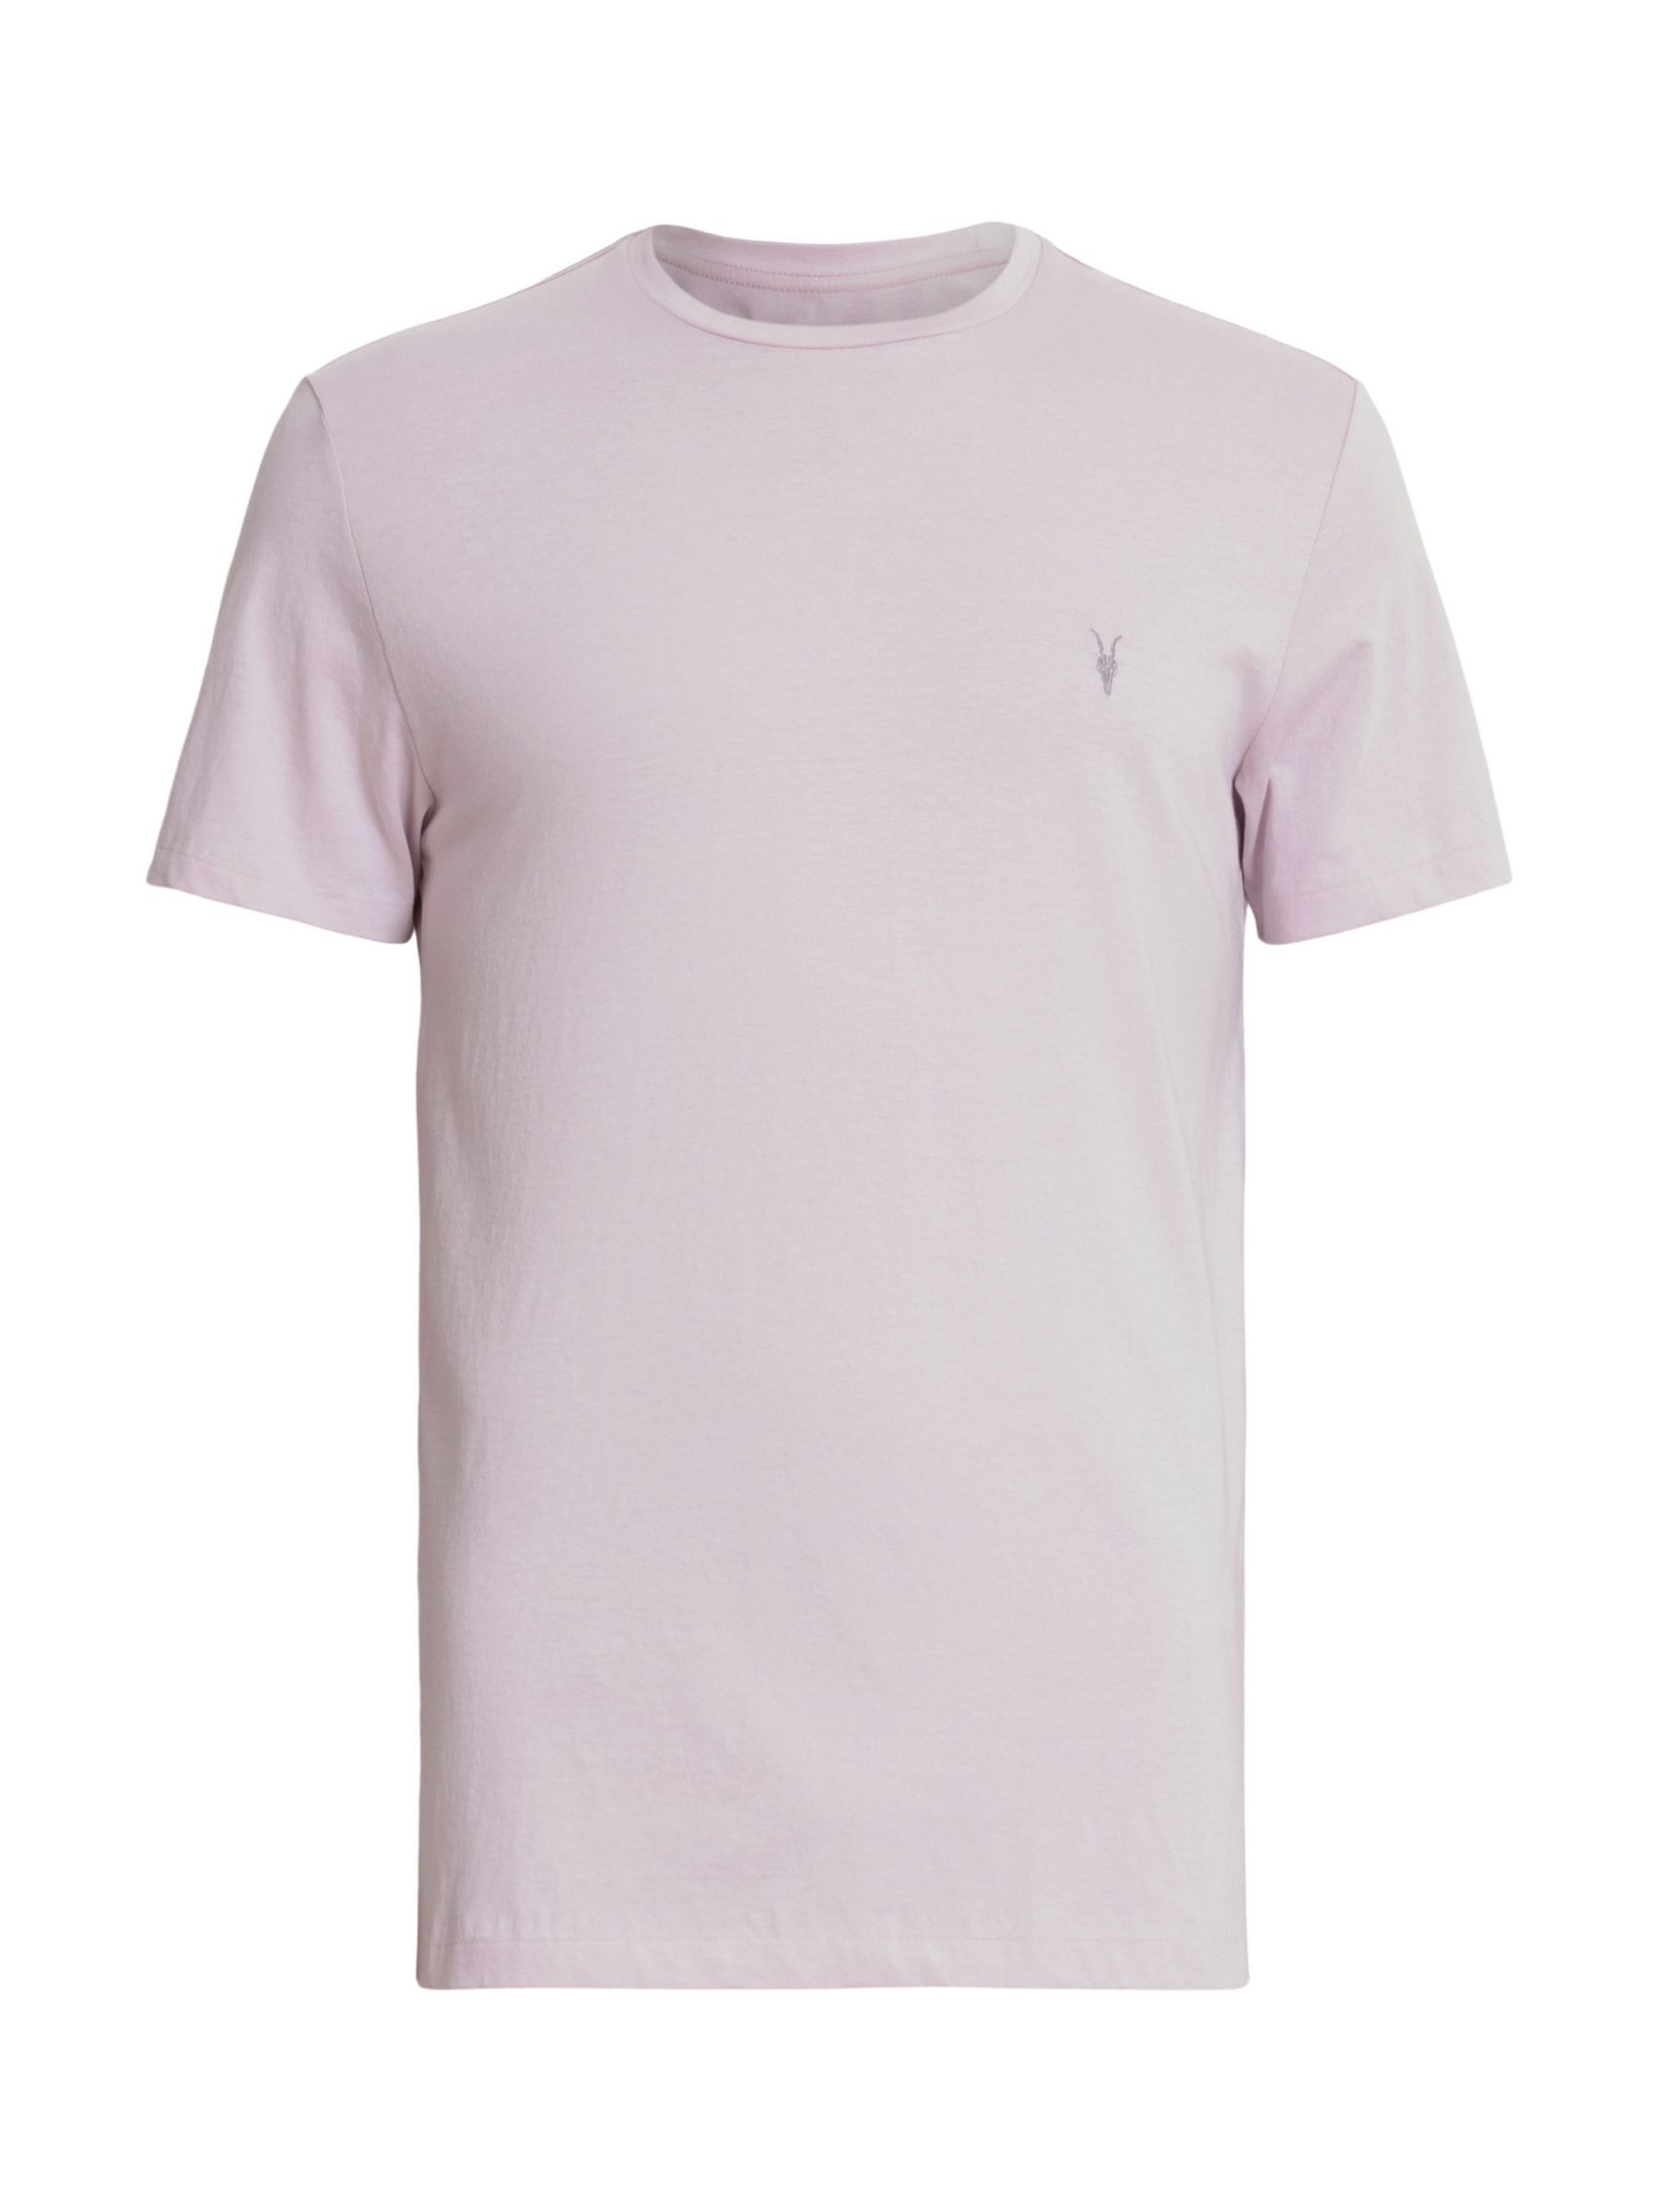 AllSaints Tonic Crew Neck T-Shirt, Sugared Lilac, L